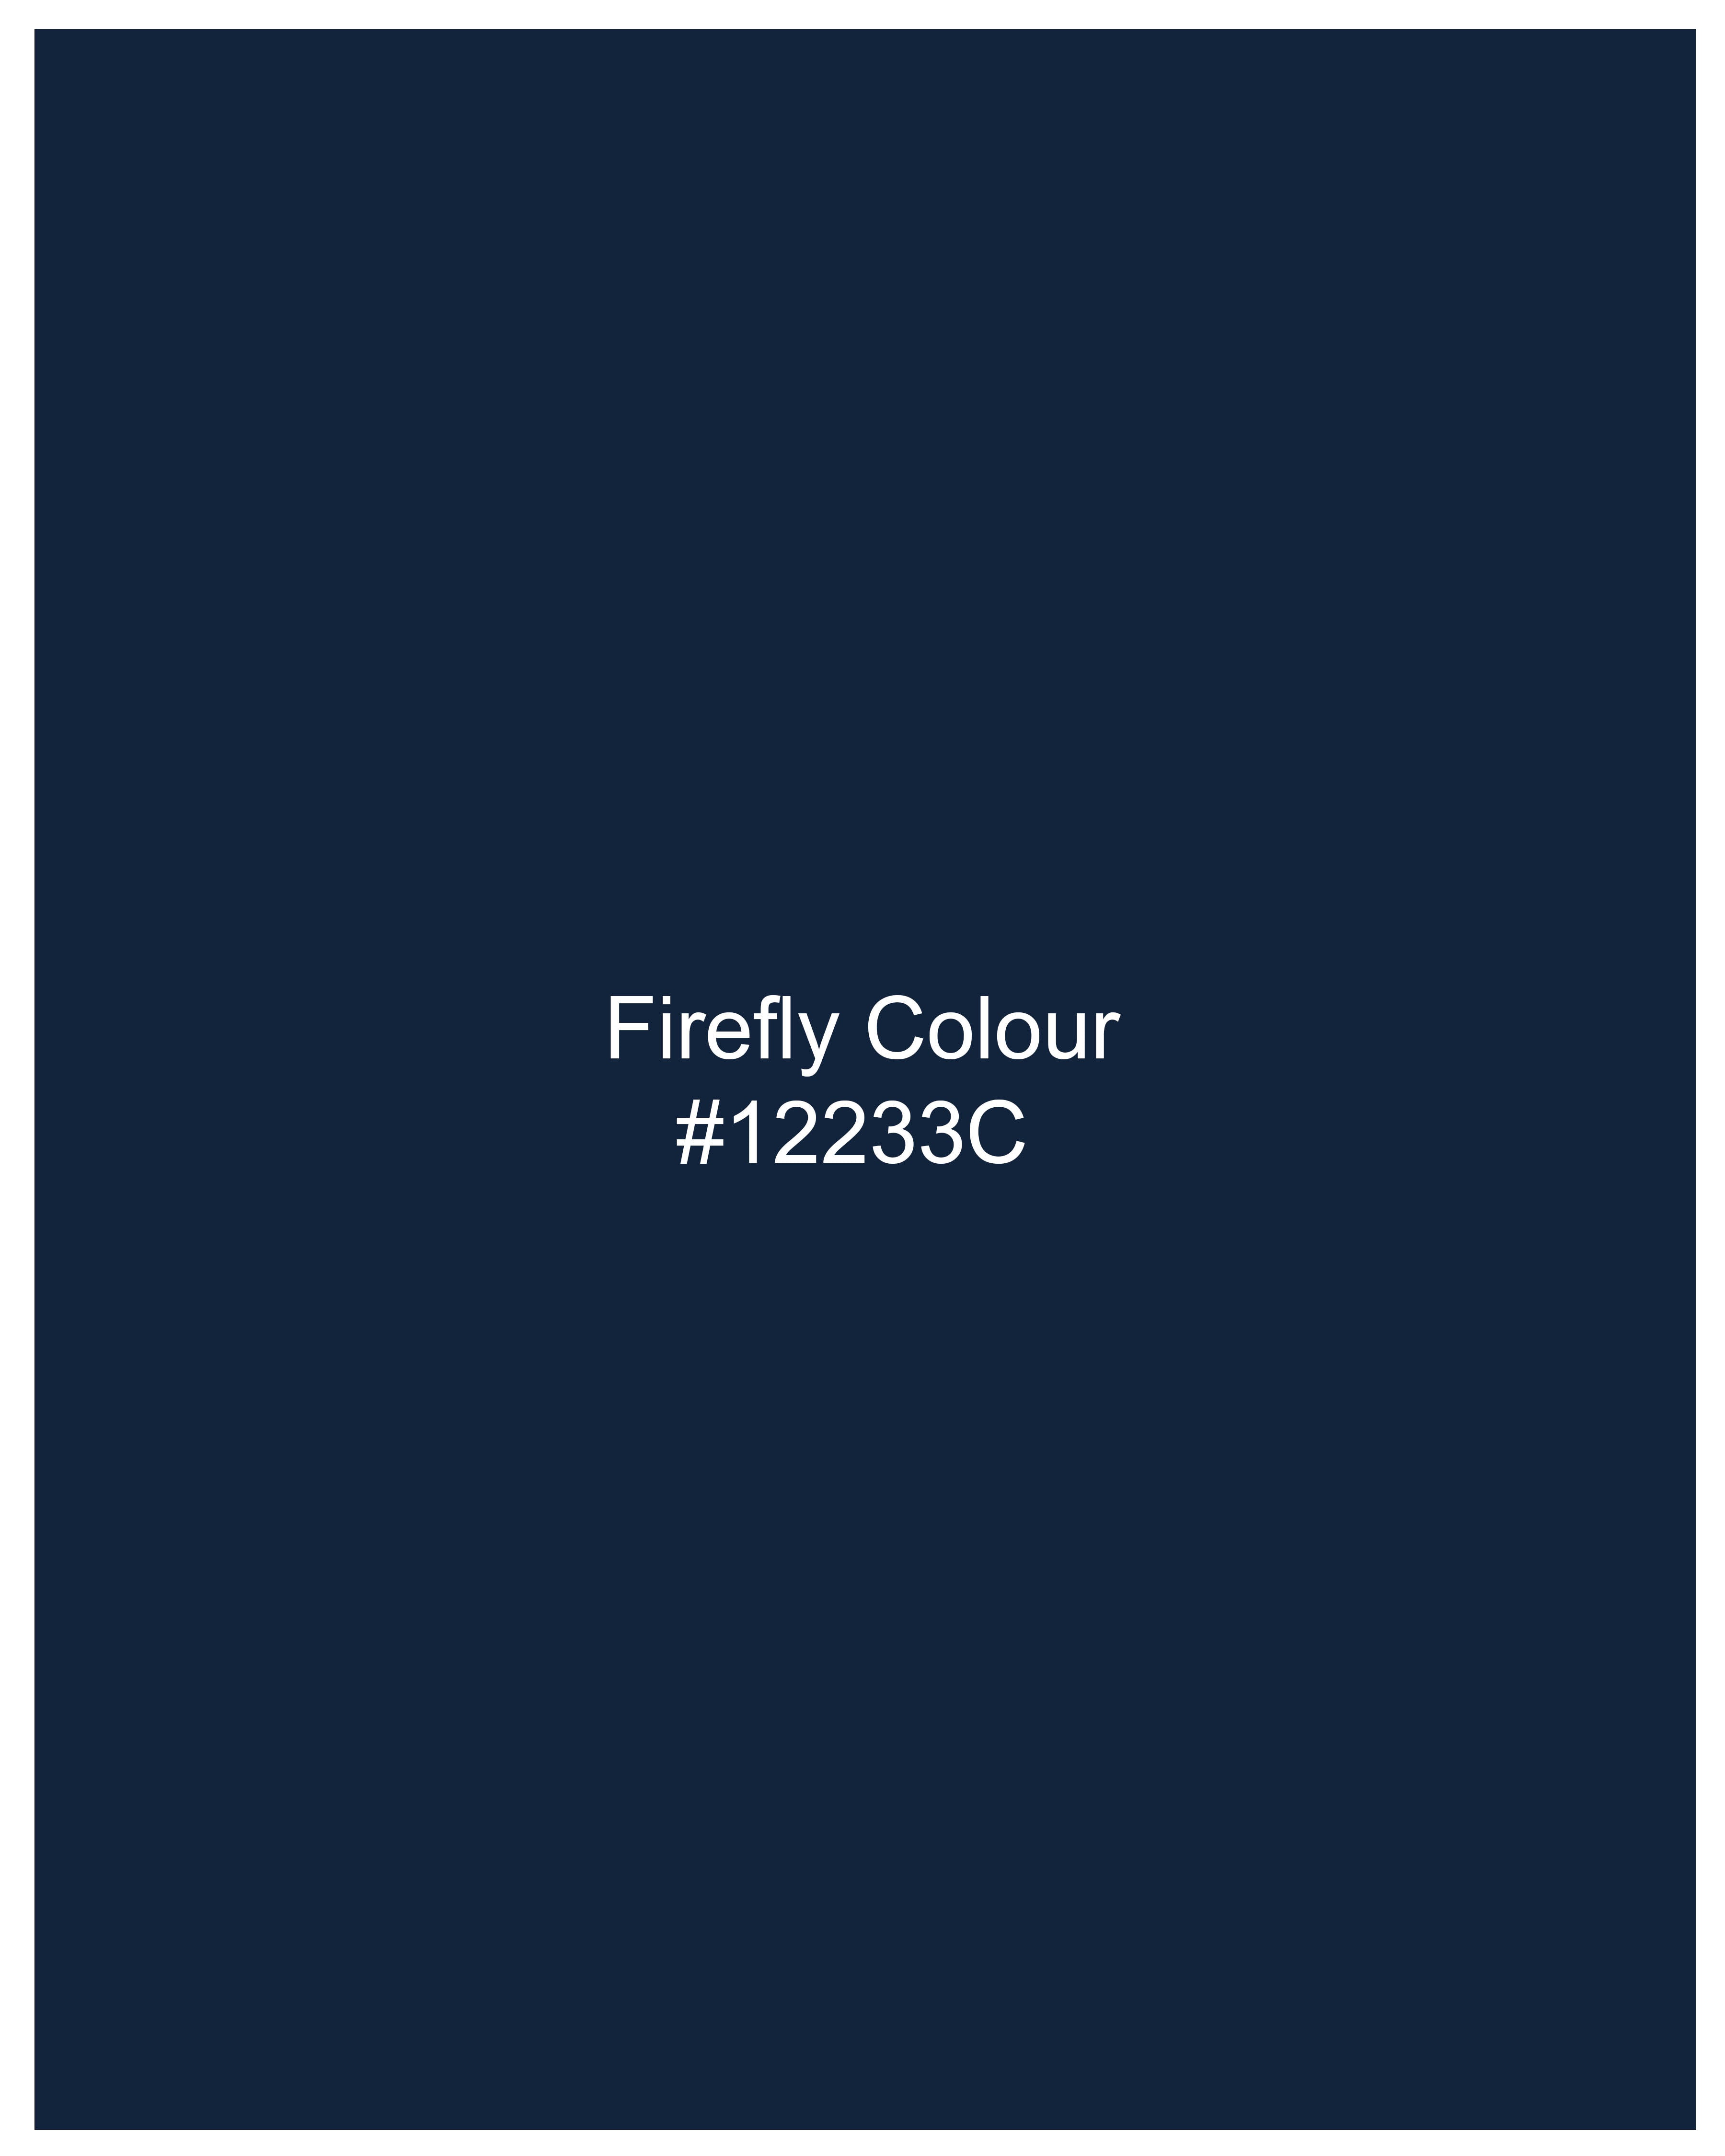 Firefly Navy Blue Dobby Textured Premium Giza Cotton Shirt 9927-38, 9927-H-38, 9927-39, 9927-H-39, 9927-40, 9927-H-40, 9927-42, 9927-H-42, 9927-44, 9927-H-44, 9927-46, 9927-H-46, 9927-48, 9927-H-48, 9927-50, 9927-H-50, 9927-52, 9927-H-52